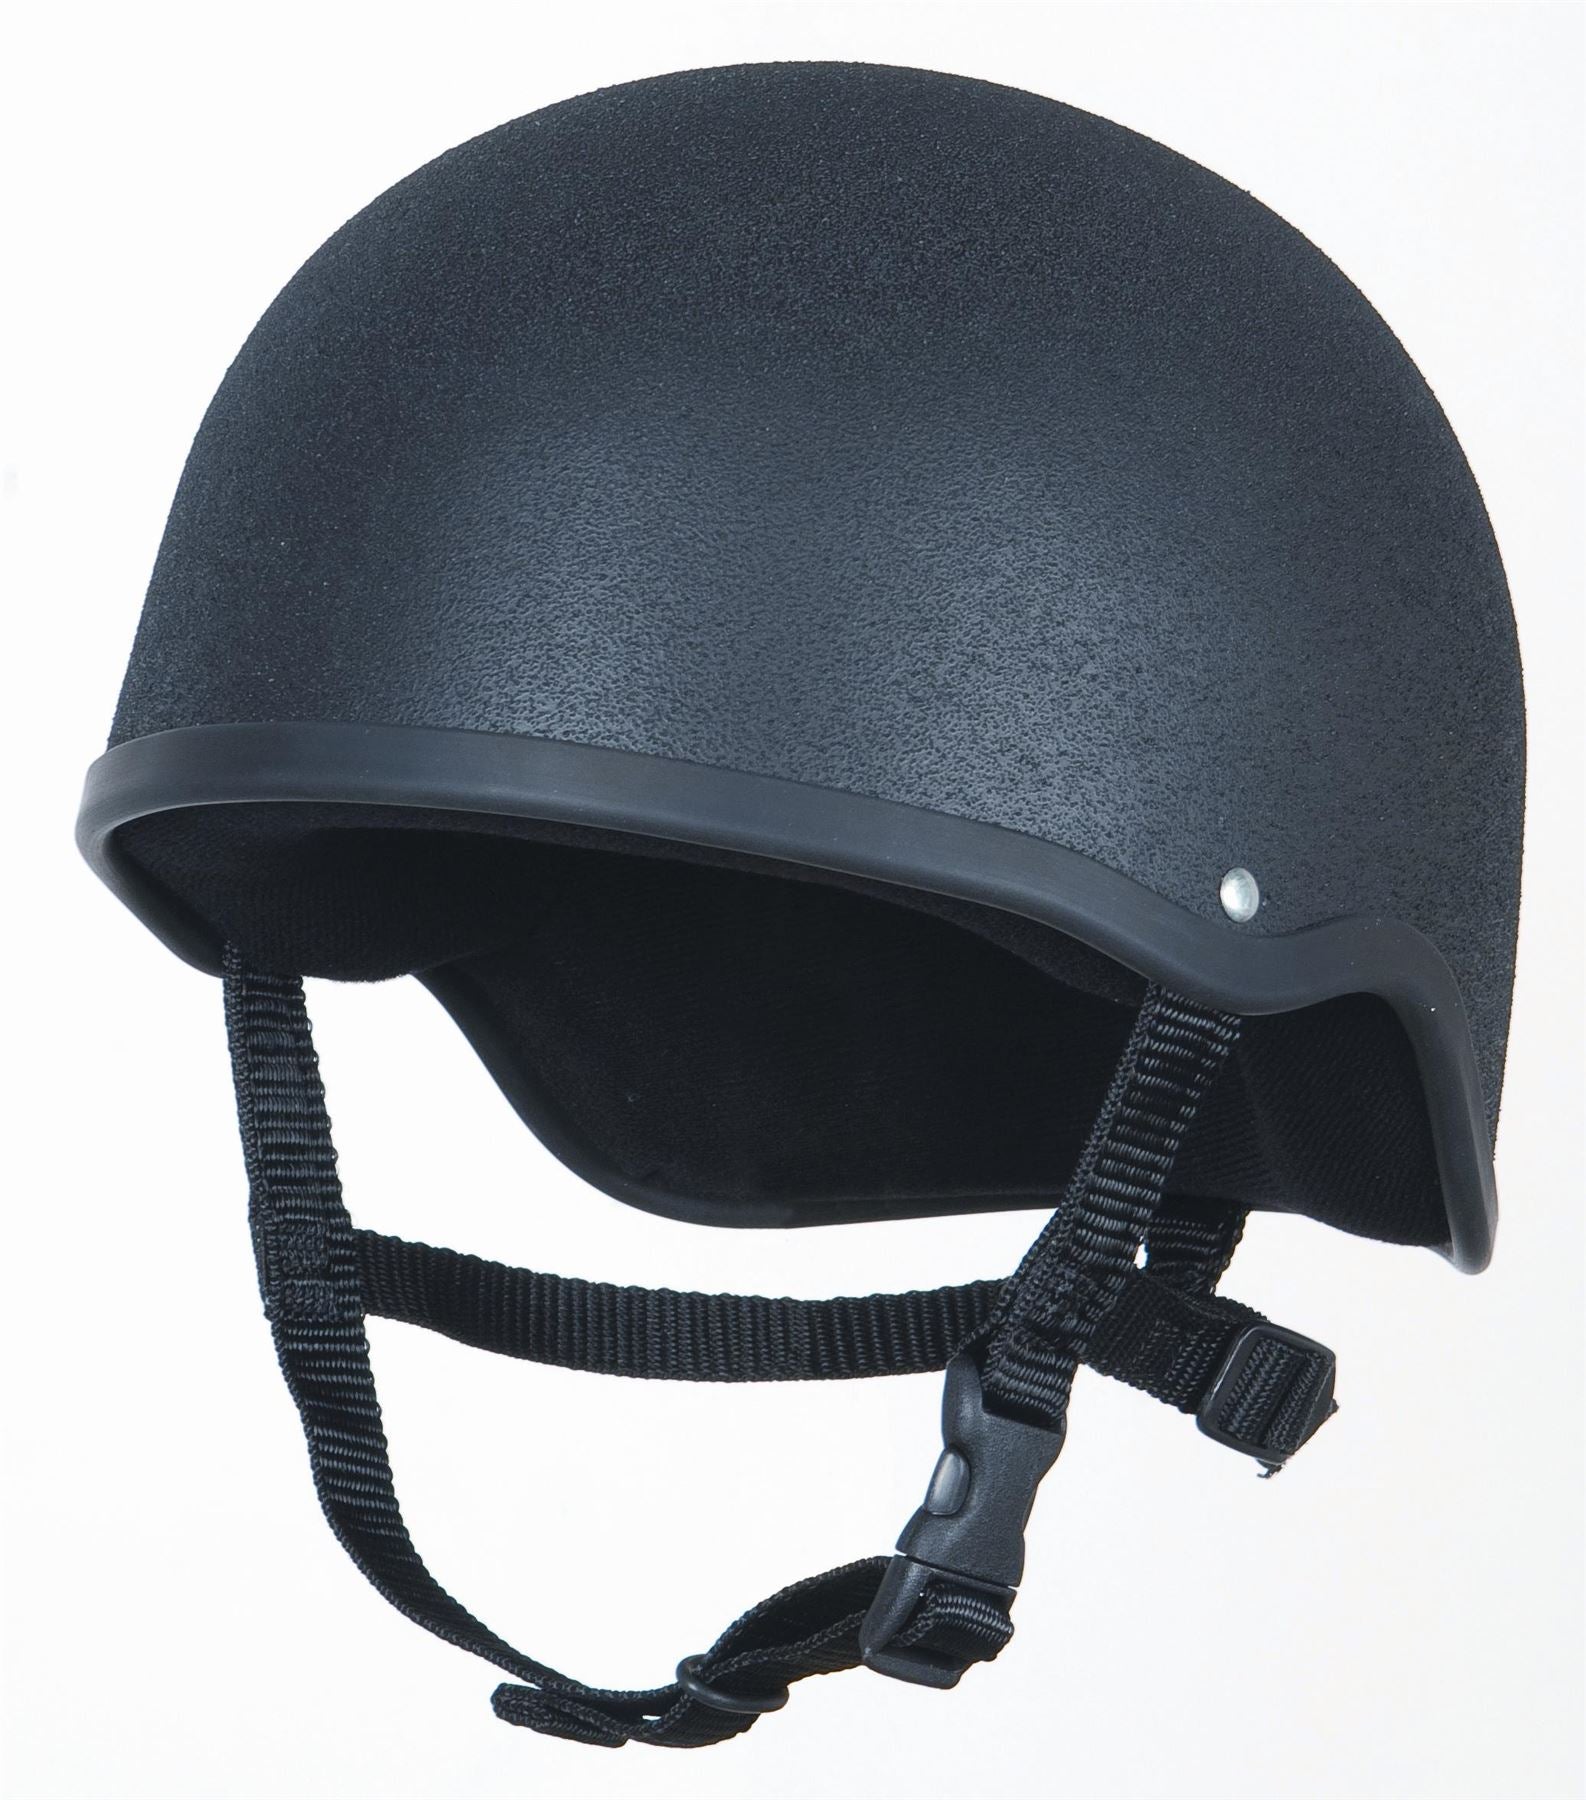 Champion Advantage Adults Helmet - Just Horse Riders